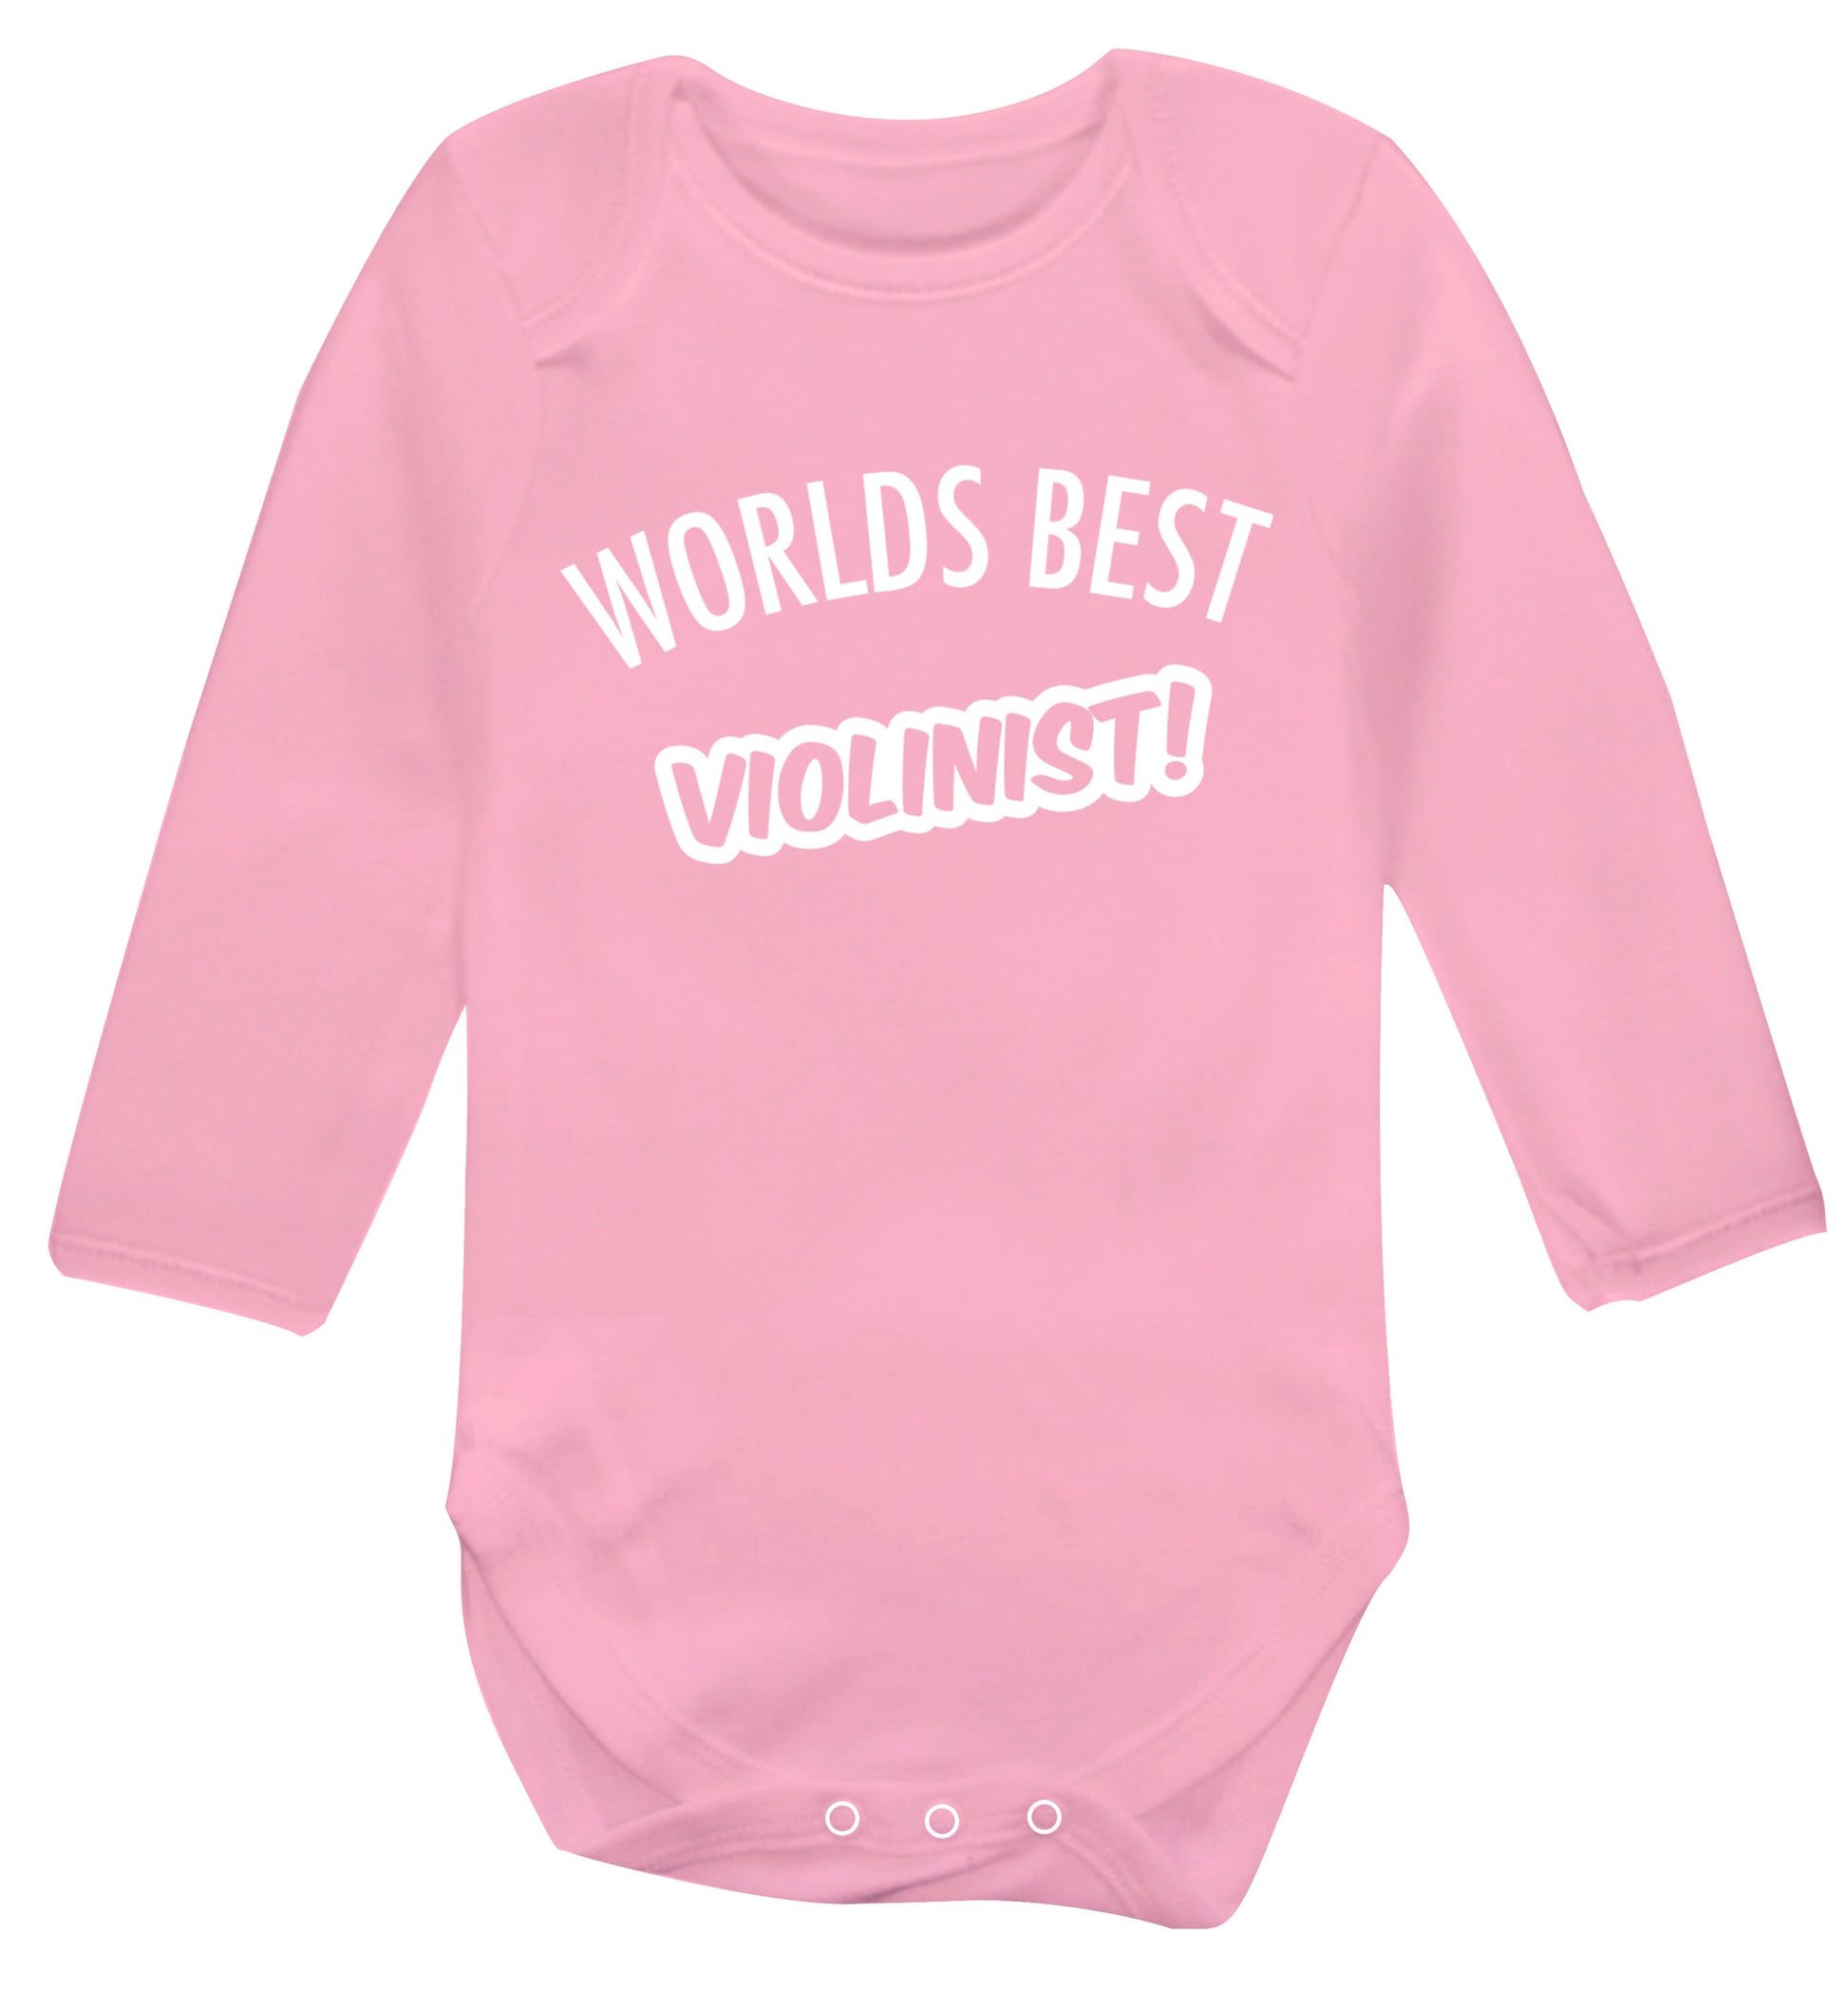 Worlds best violinist Baby Vest long sleeved pale pink 6-12 months